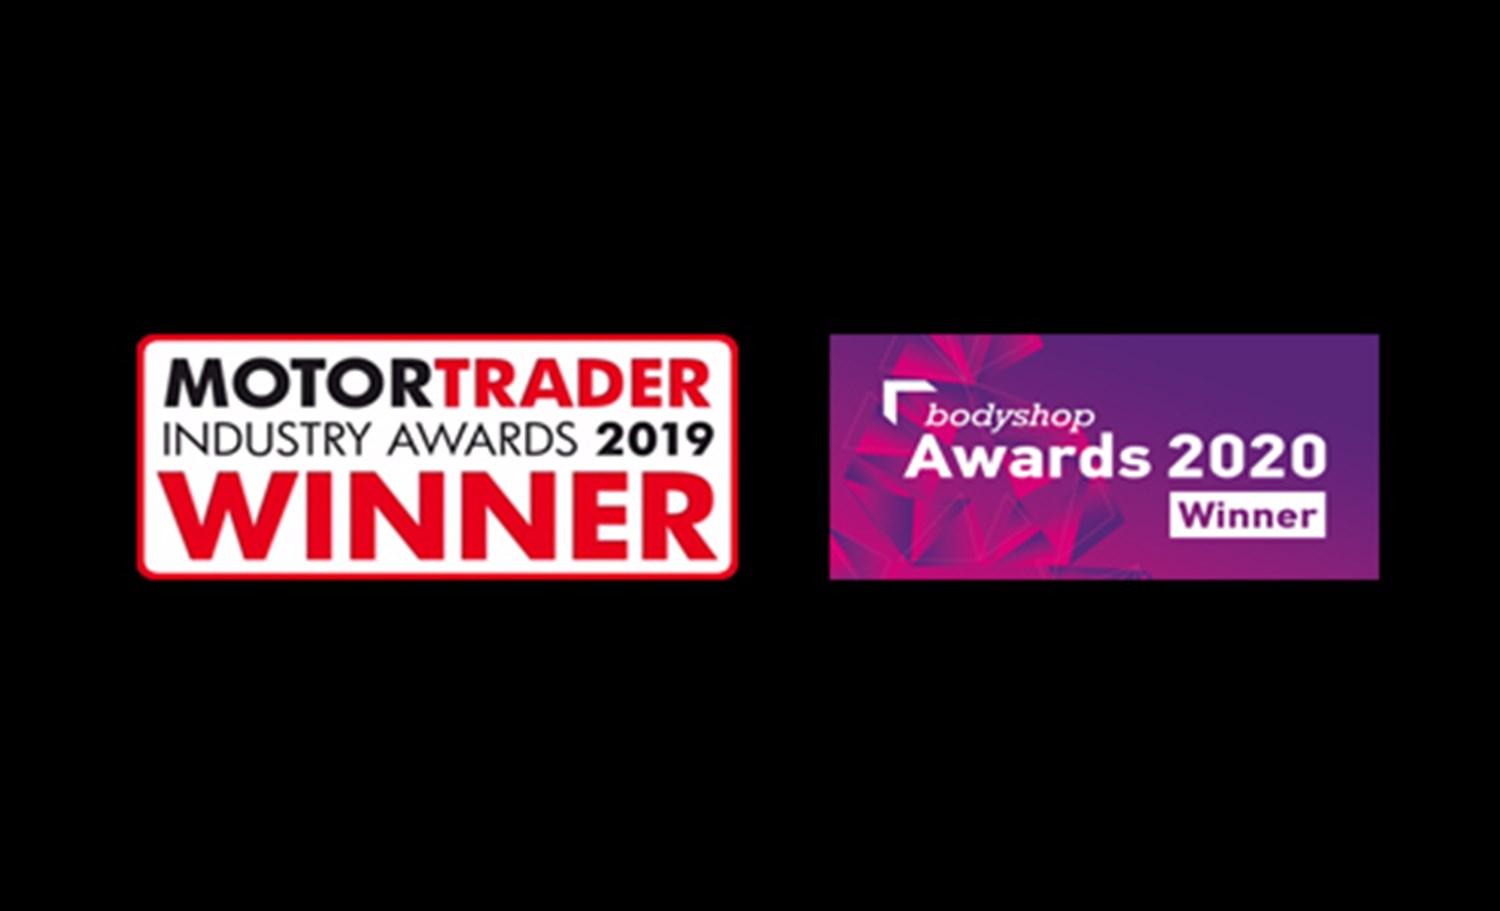 motortrader 2019 winner and bodyshop 2020 award winner